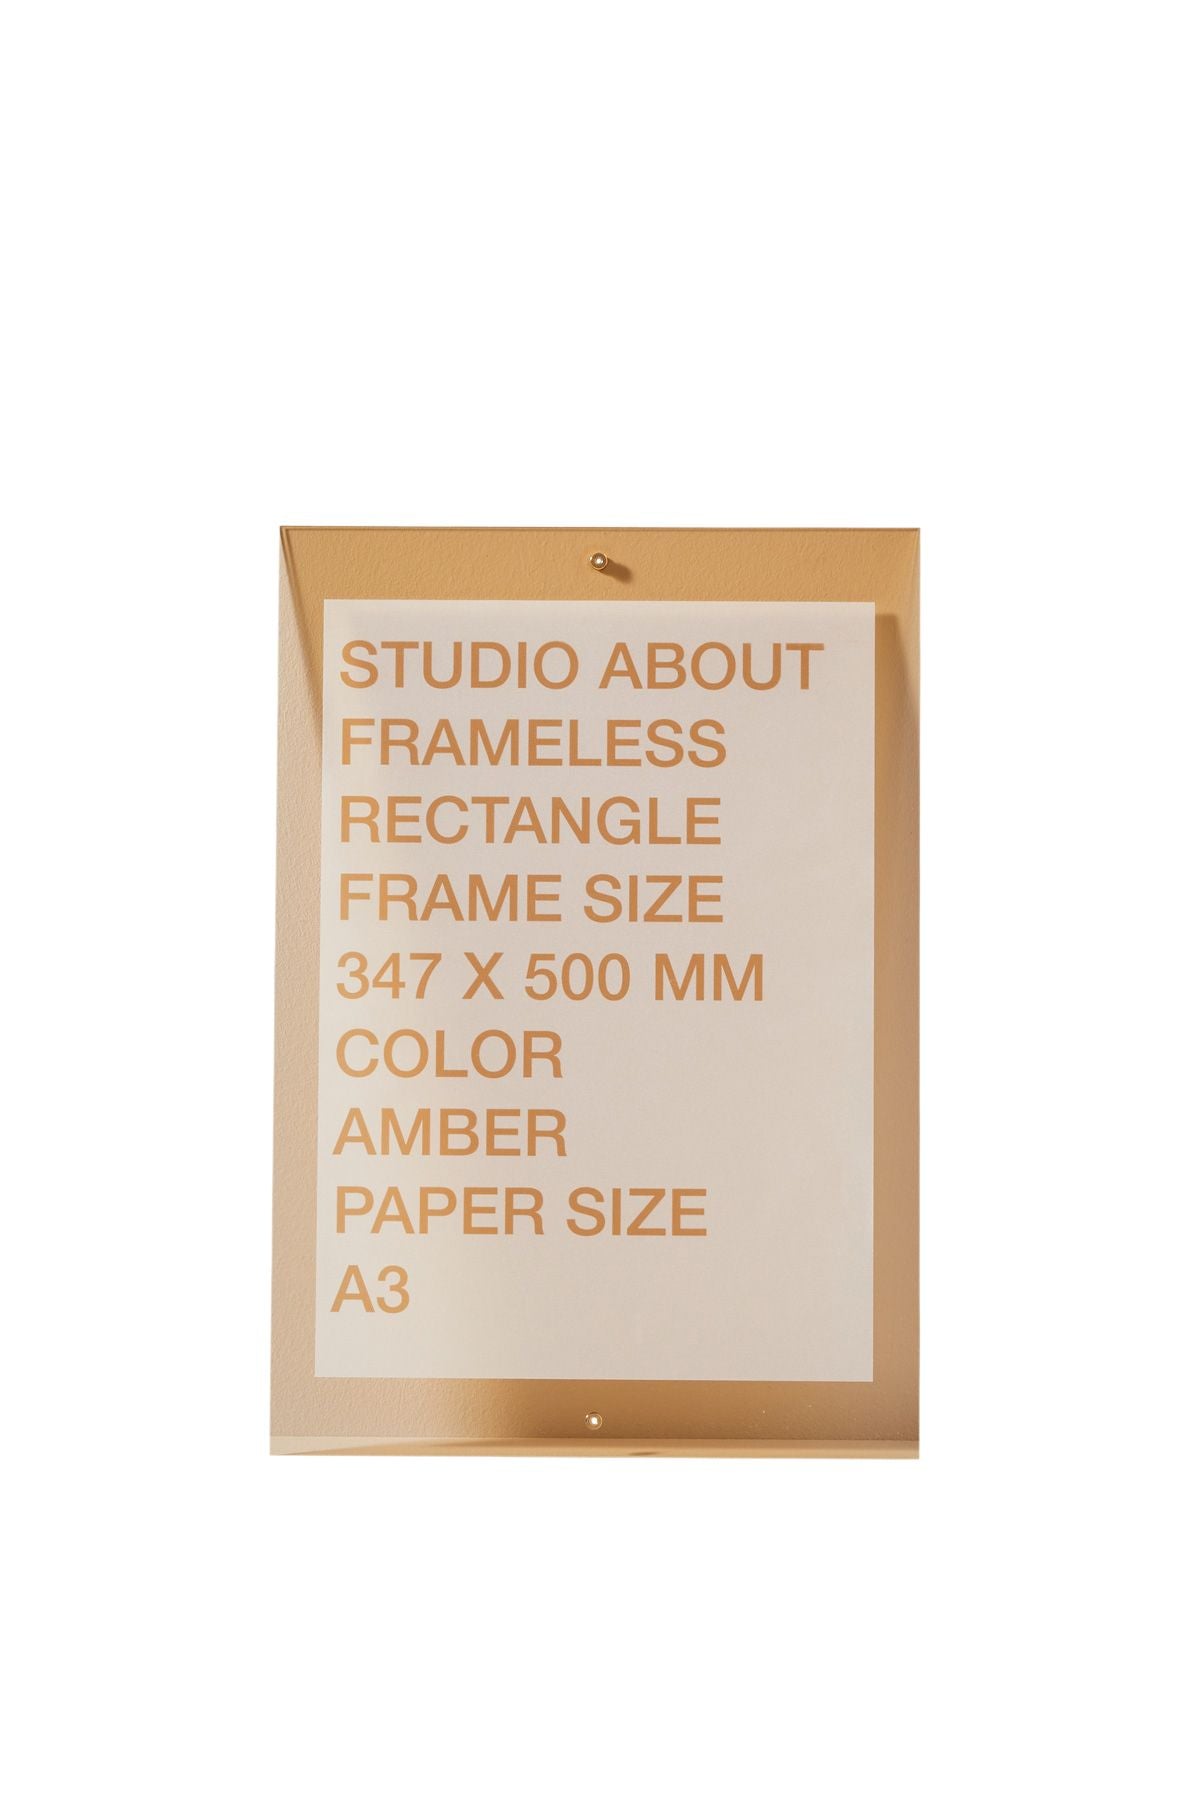 Studio over frameloze frame A3 -rechthoek, Amber